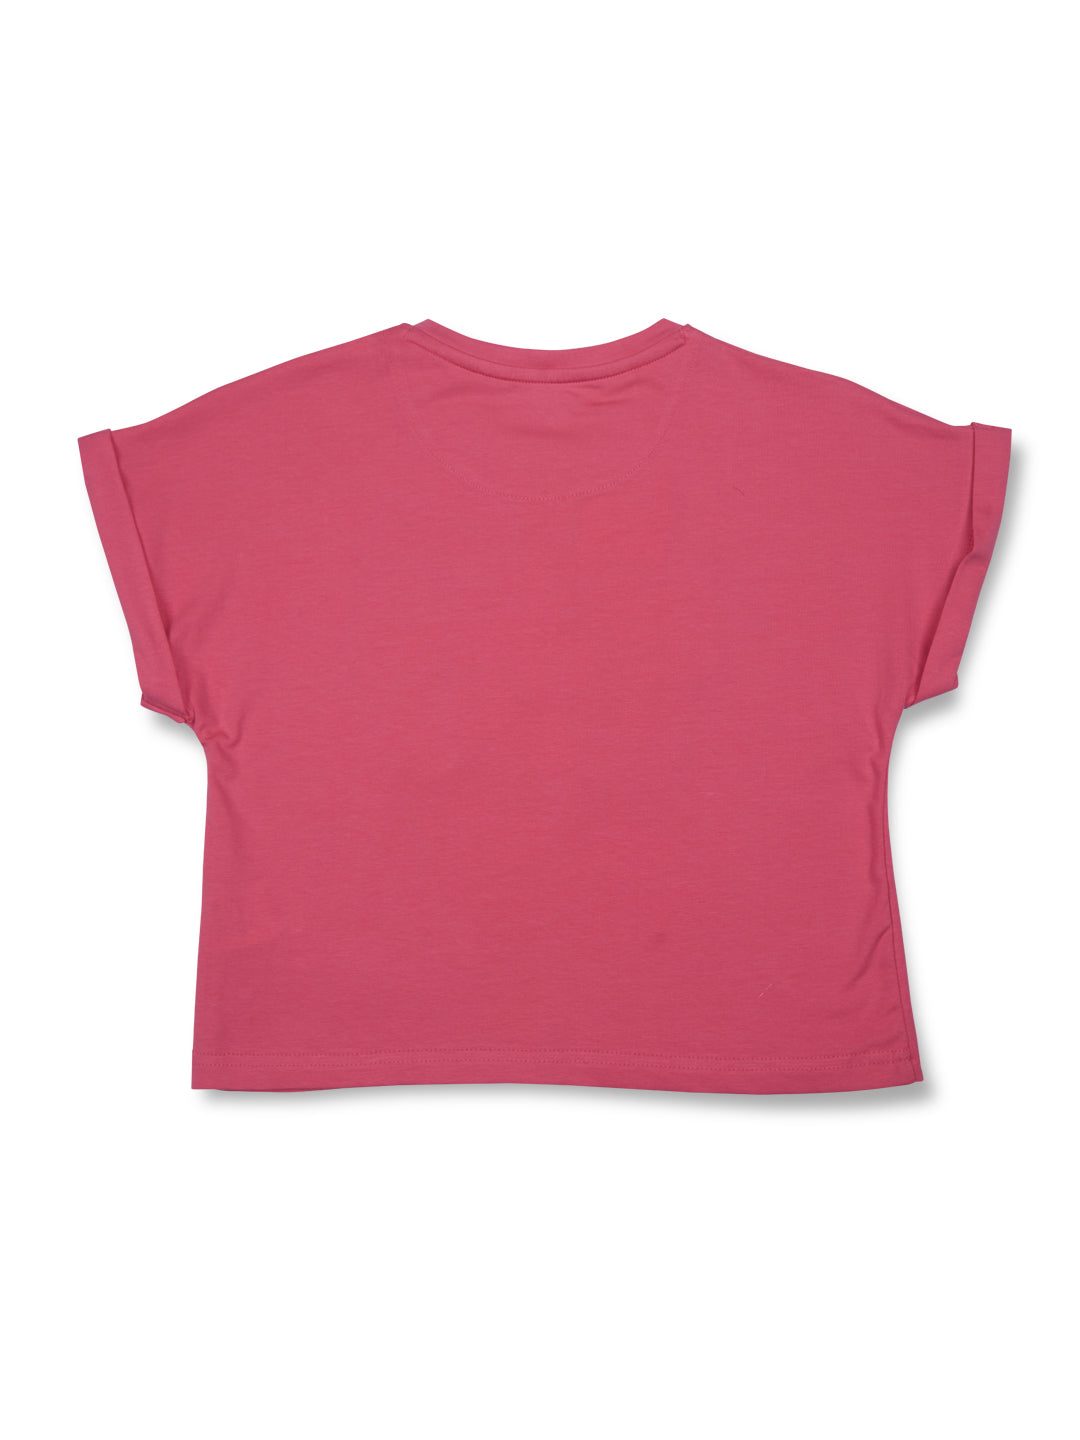 Girls pink round neck knitted cotton printed crop top.